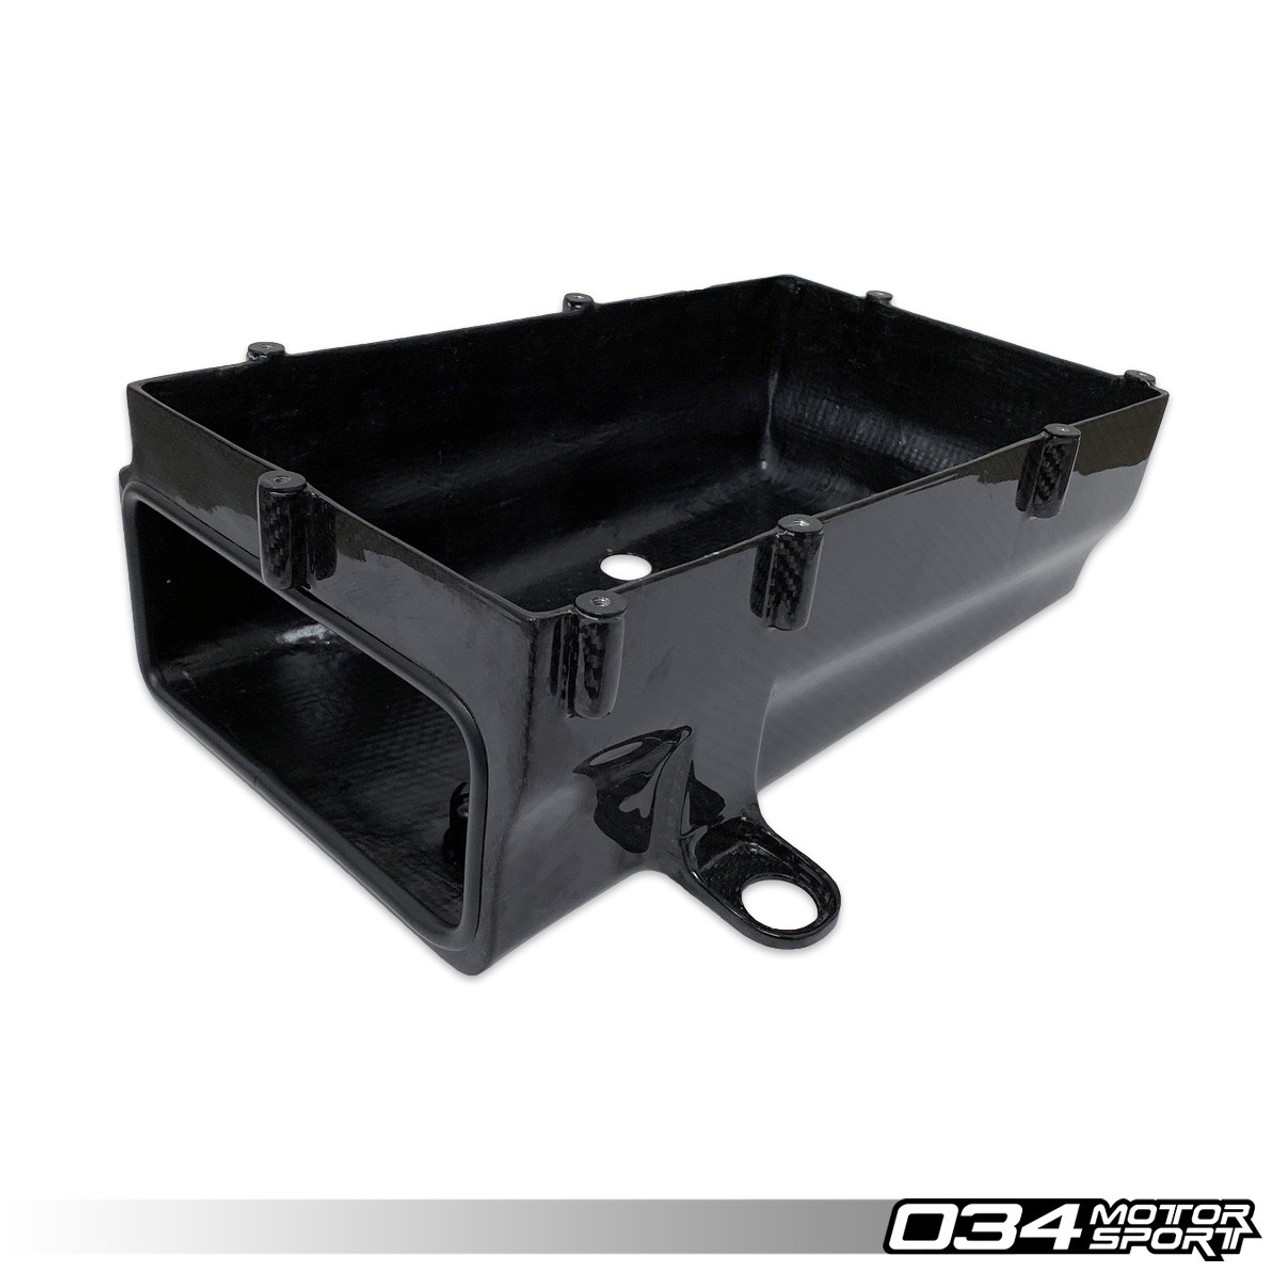 034Motorsport X34 Carbon Fiber Lower Intake Box & Fresh Air Duct for 8V RS3 & 8S TTRS